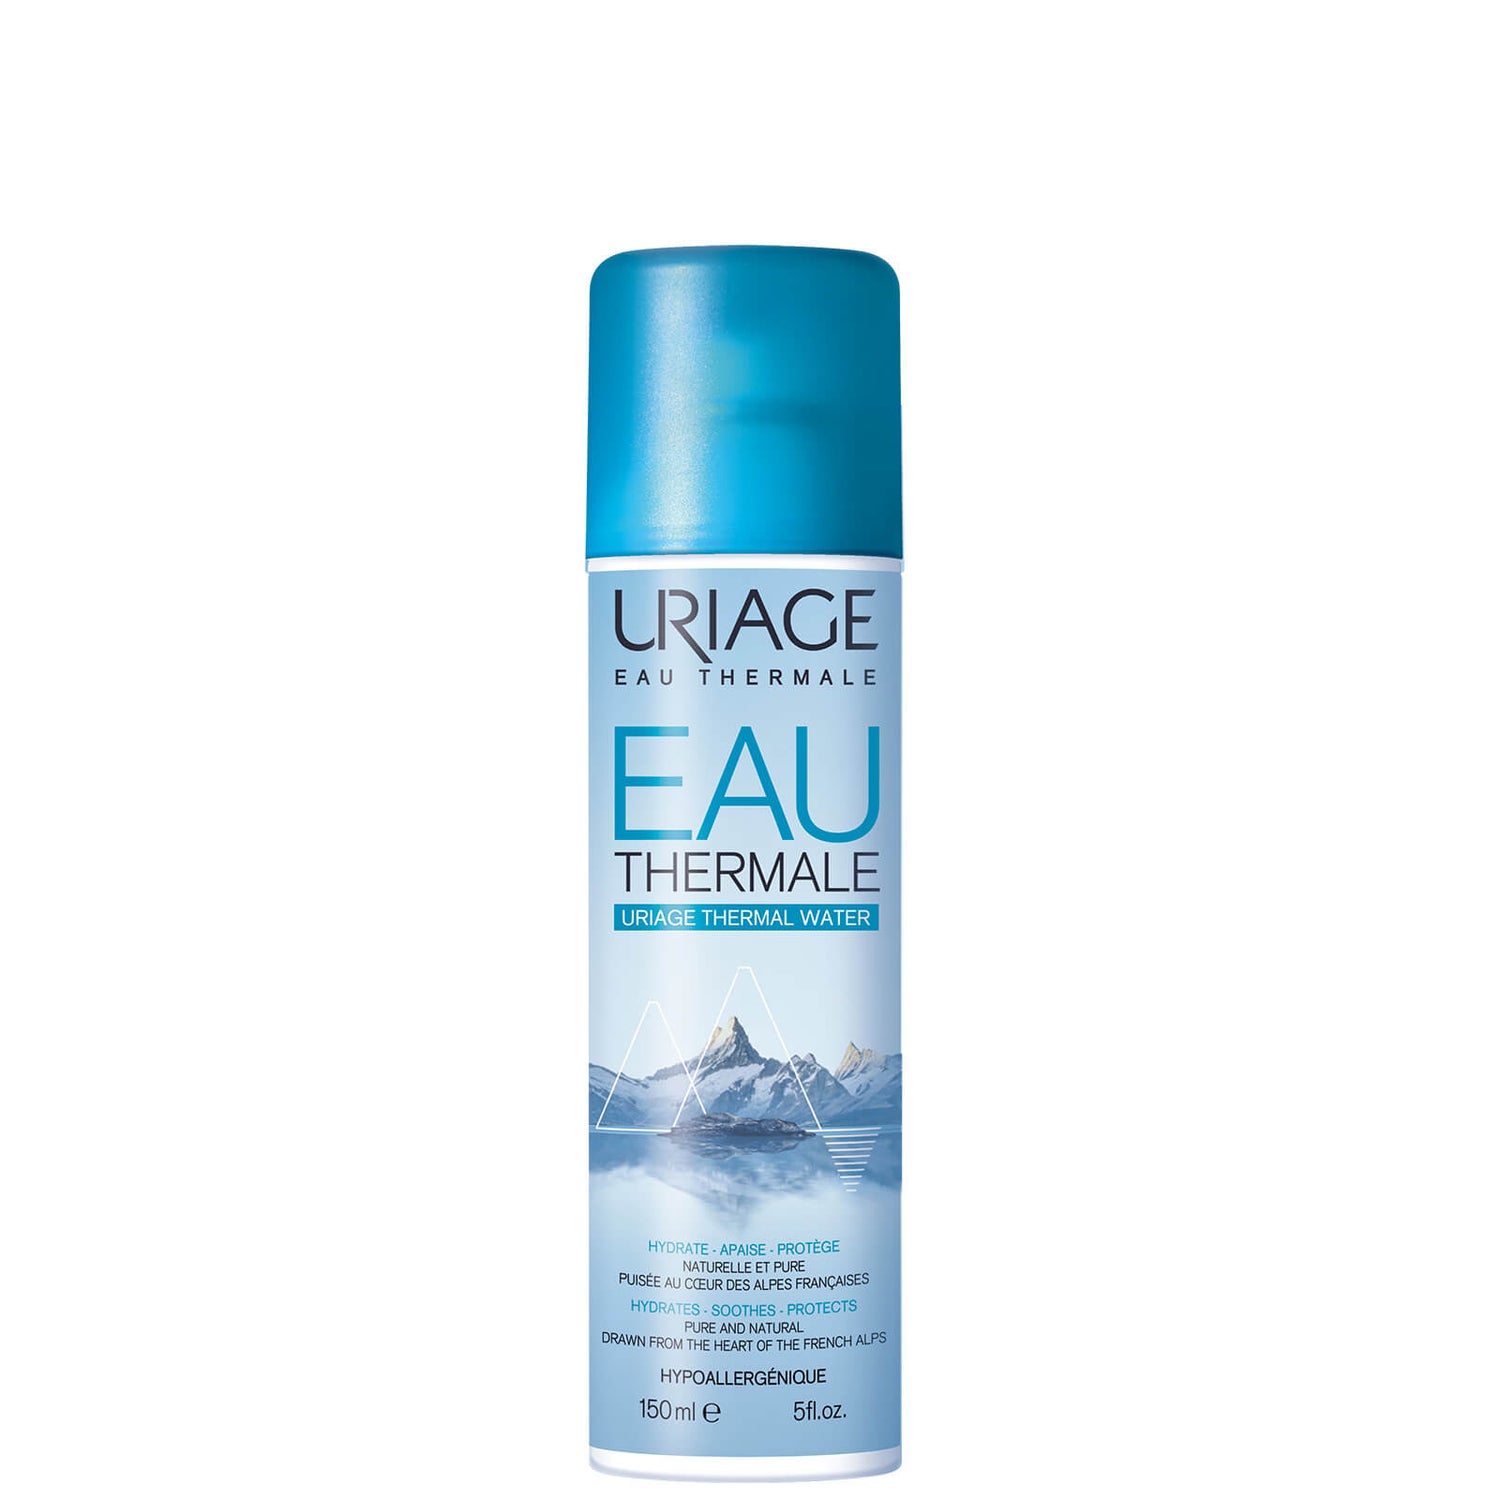 Uriage Eau Thermale Pure acqua termale (150ml)